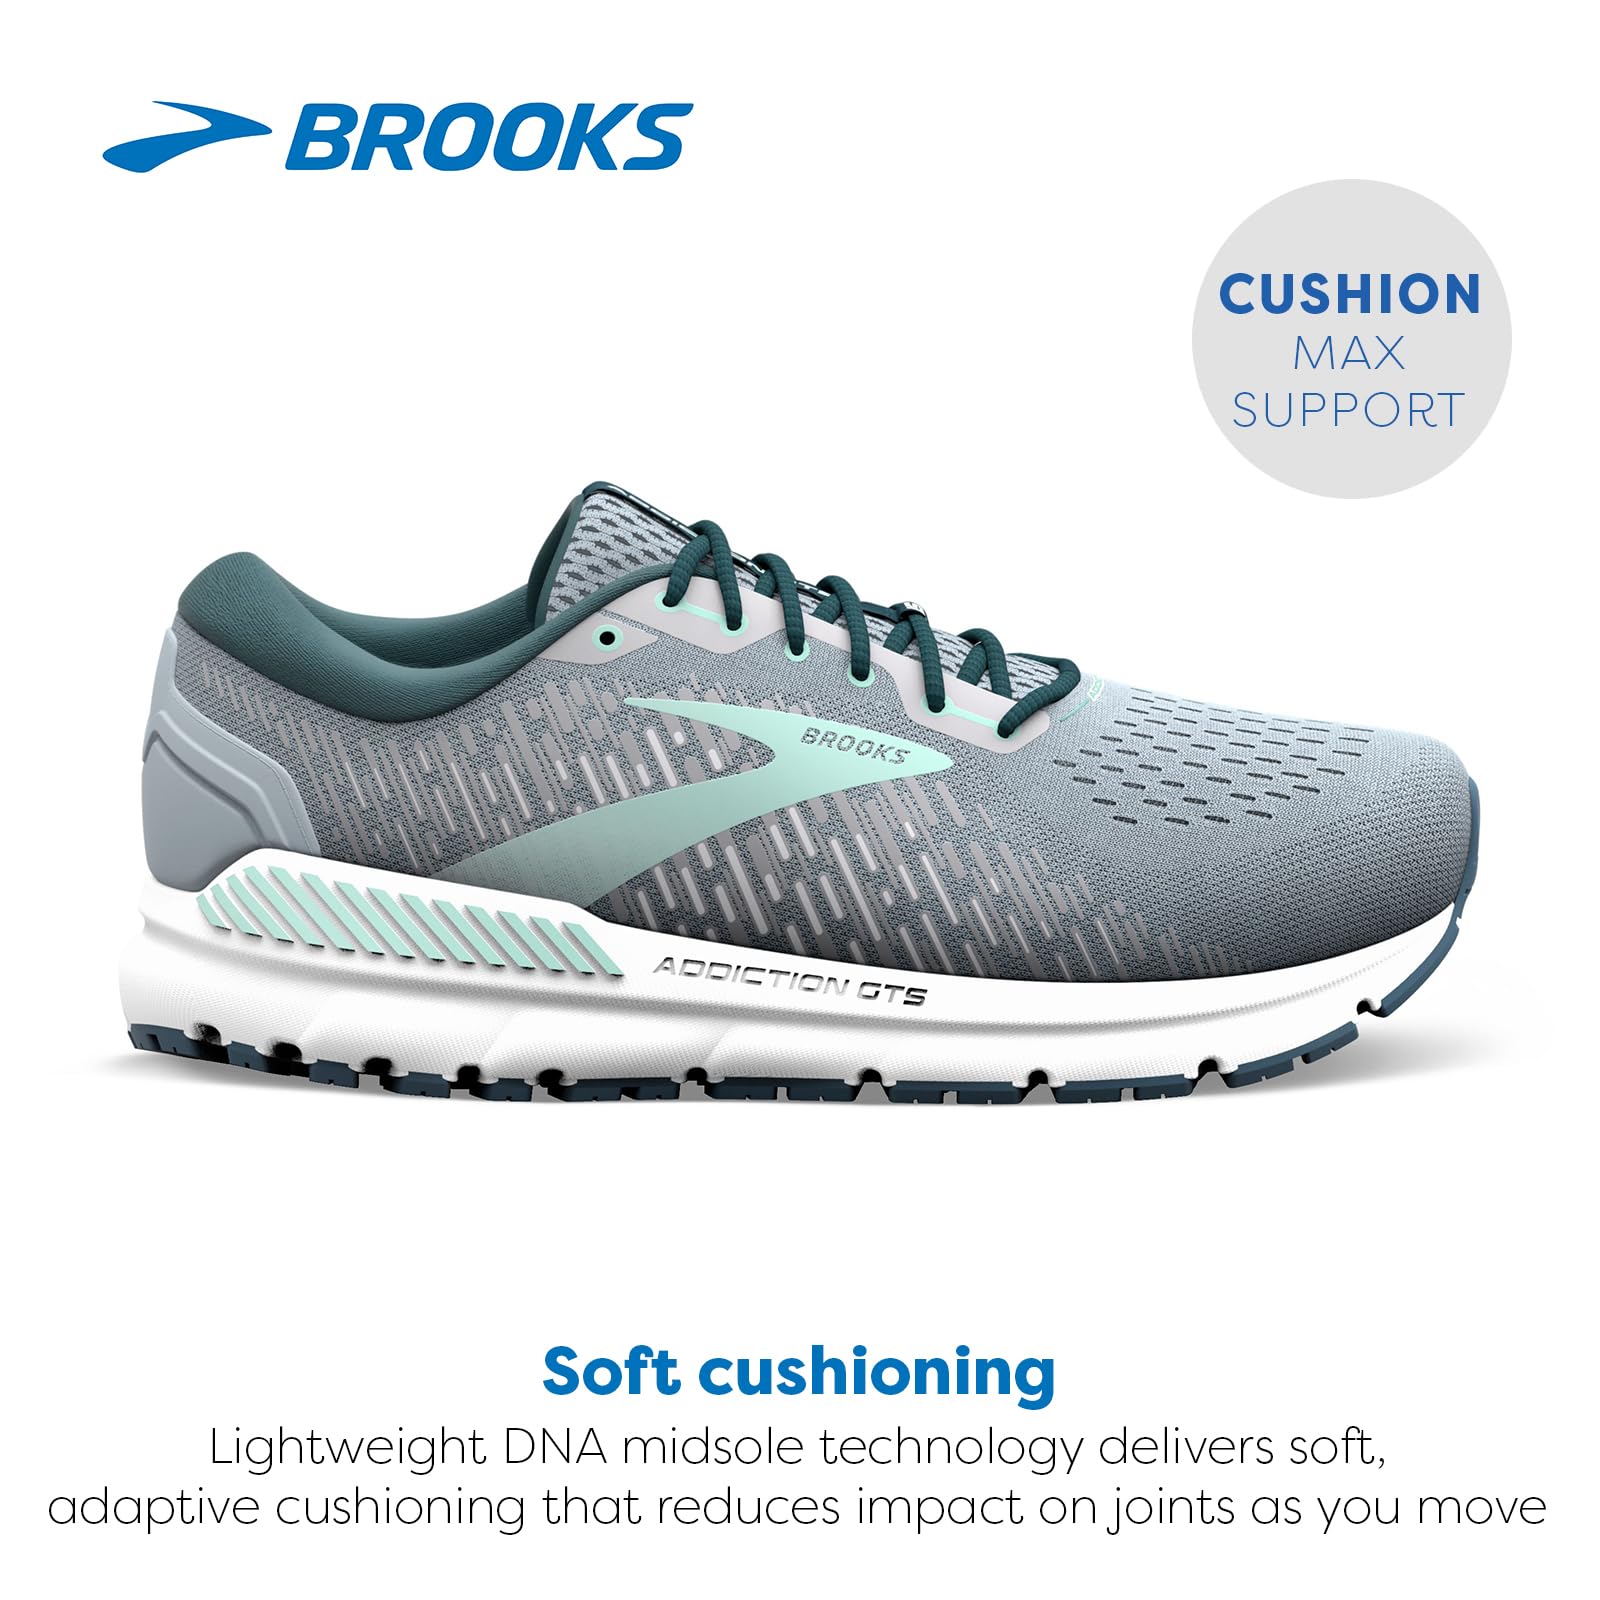 Brooks Women's Addiction GTS 15 Supportive Running Shoe - Grey/Navy/Aqua - 9 Narrow